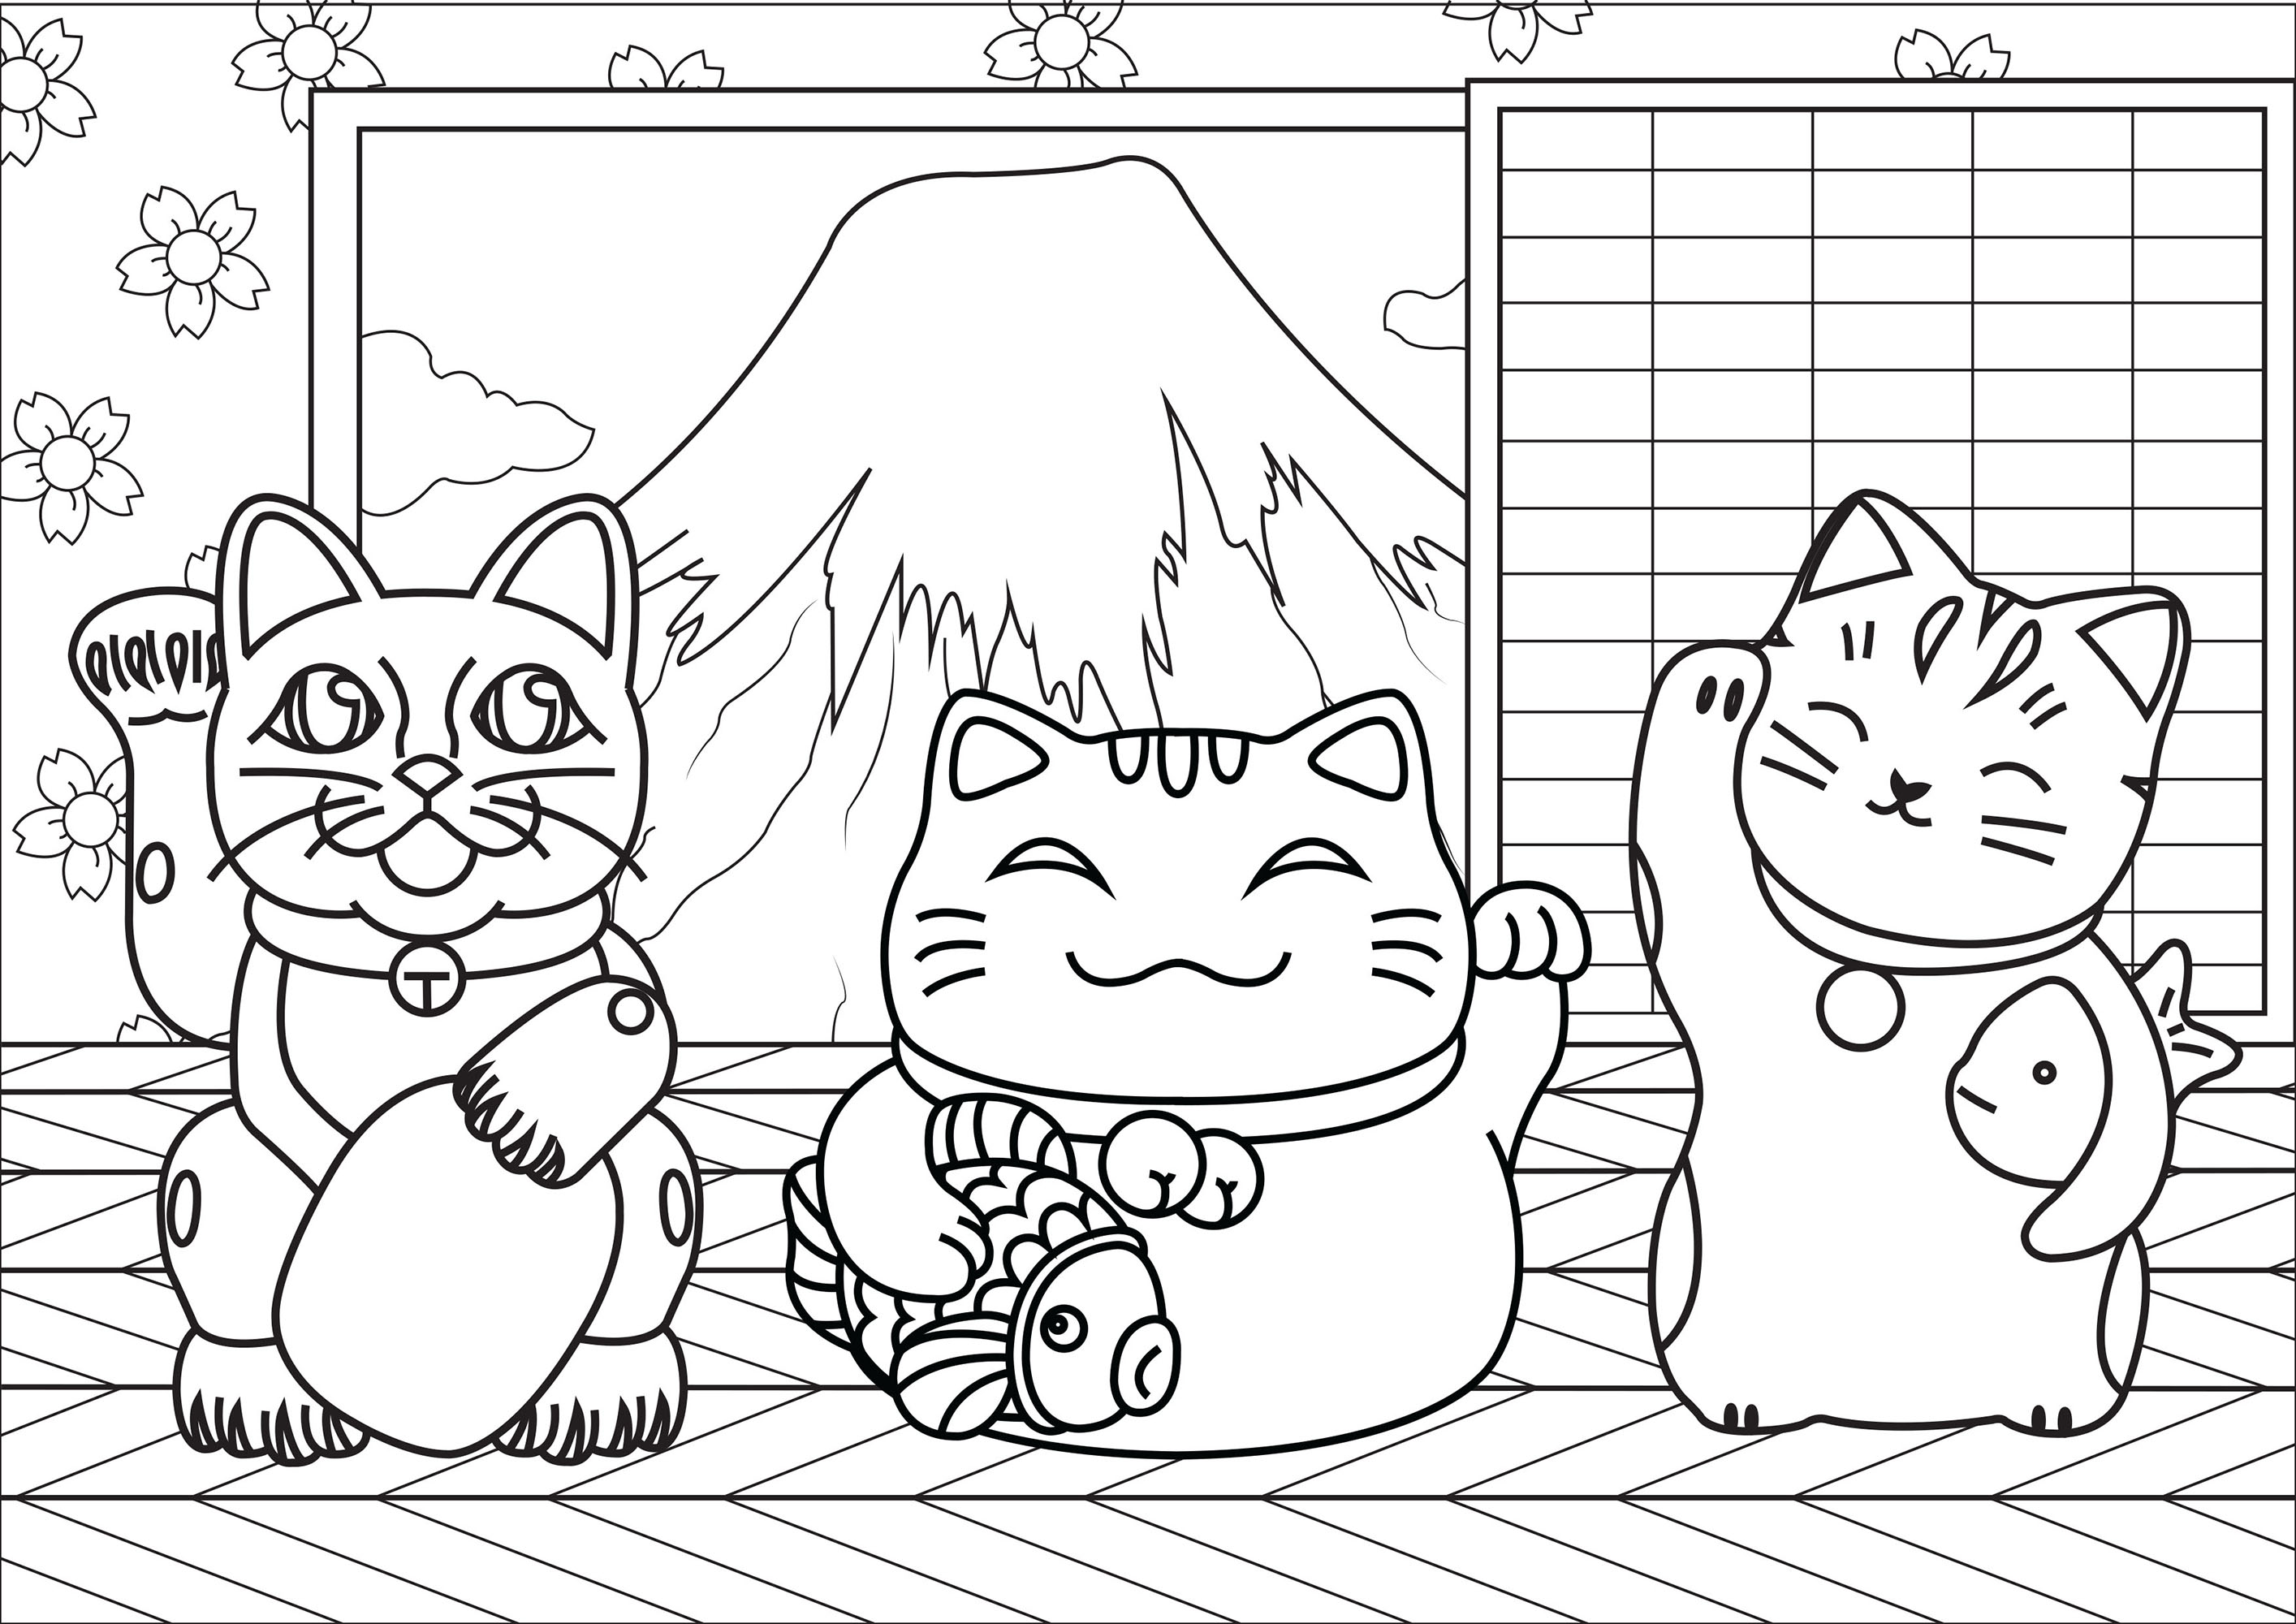 Download Maneki Neko in front of Japan's Mount Fuji simple version - Japan Adult Coloring Pages